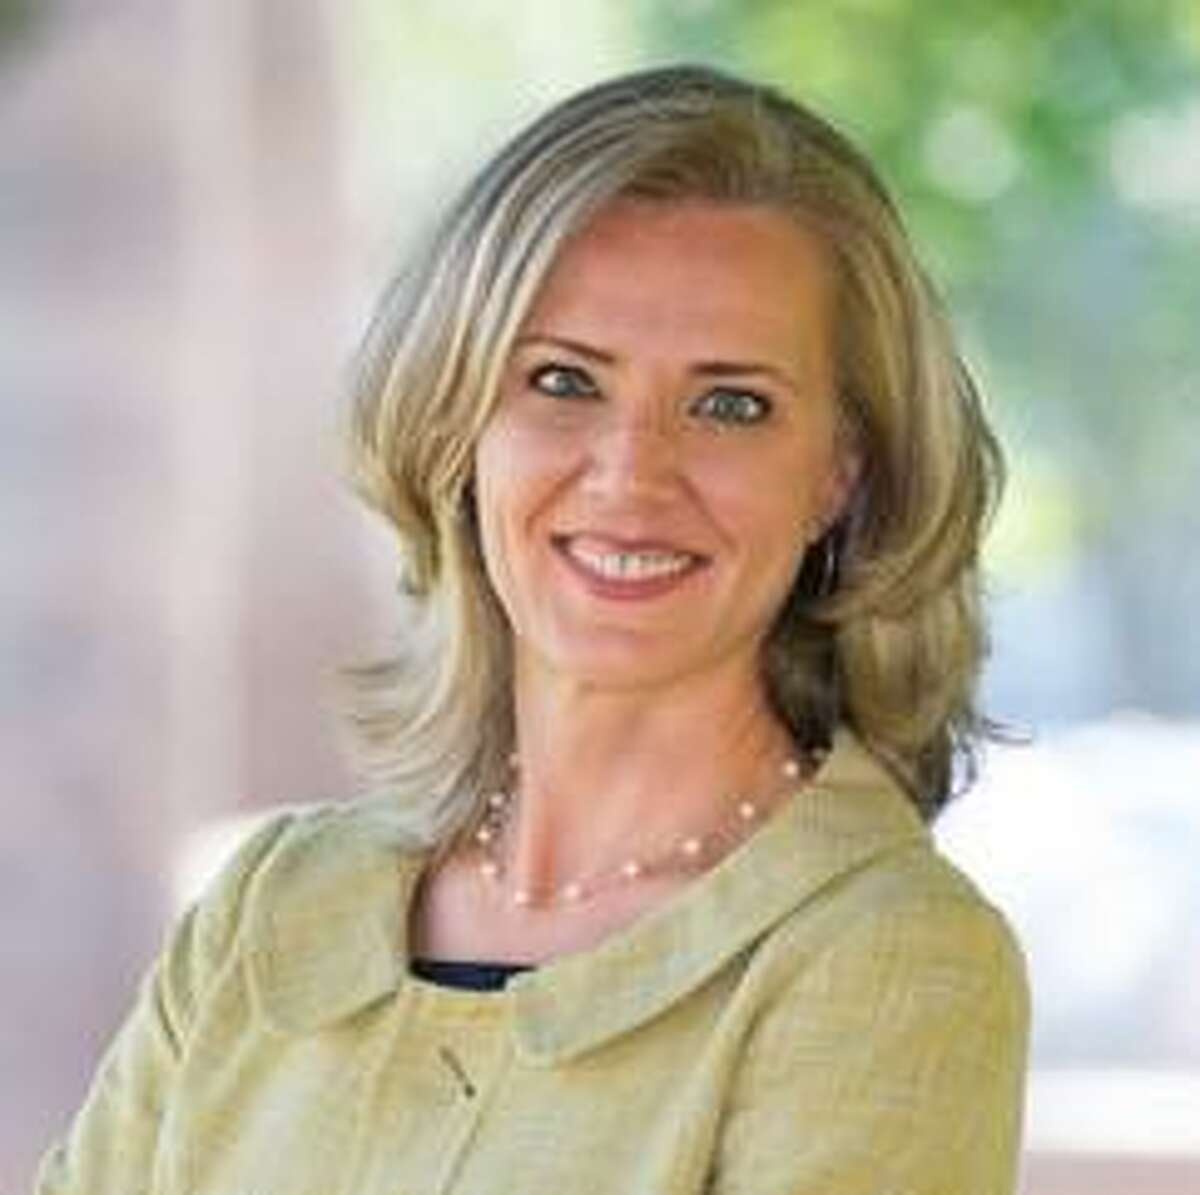 District 5 incumbent Trustee Sue Deigaard.